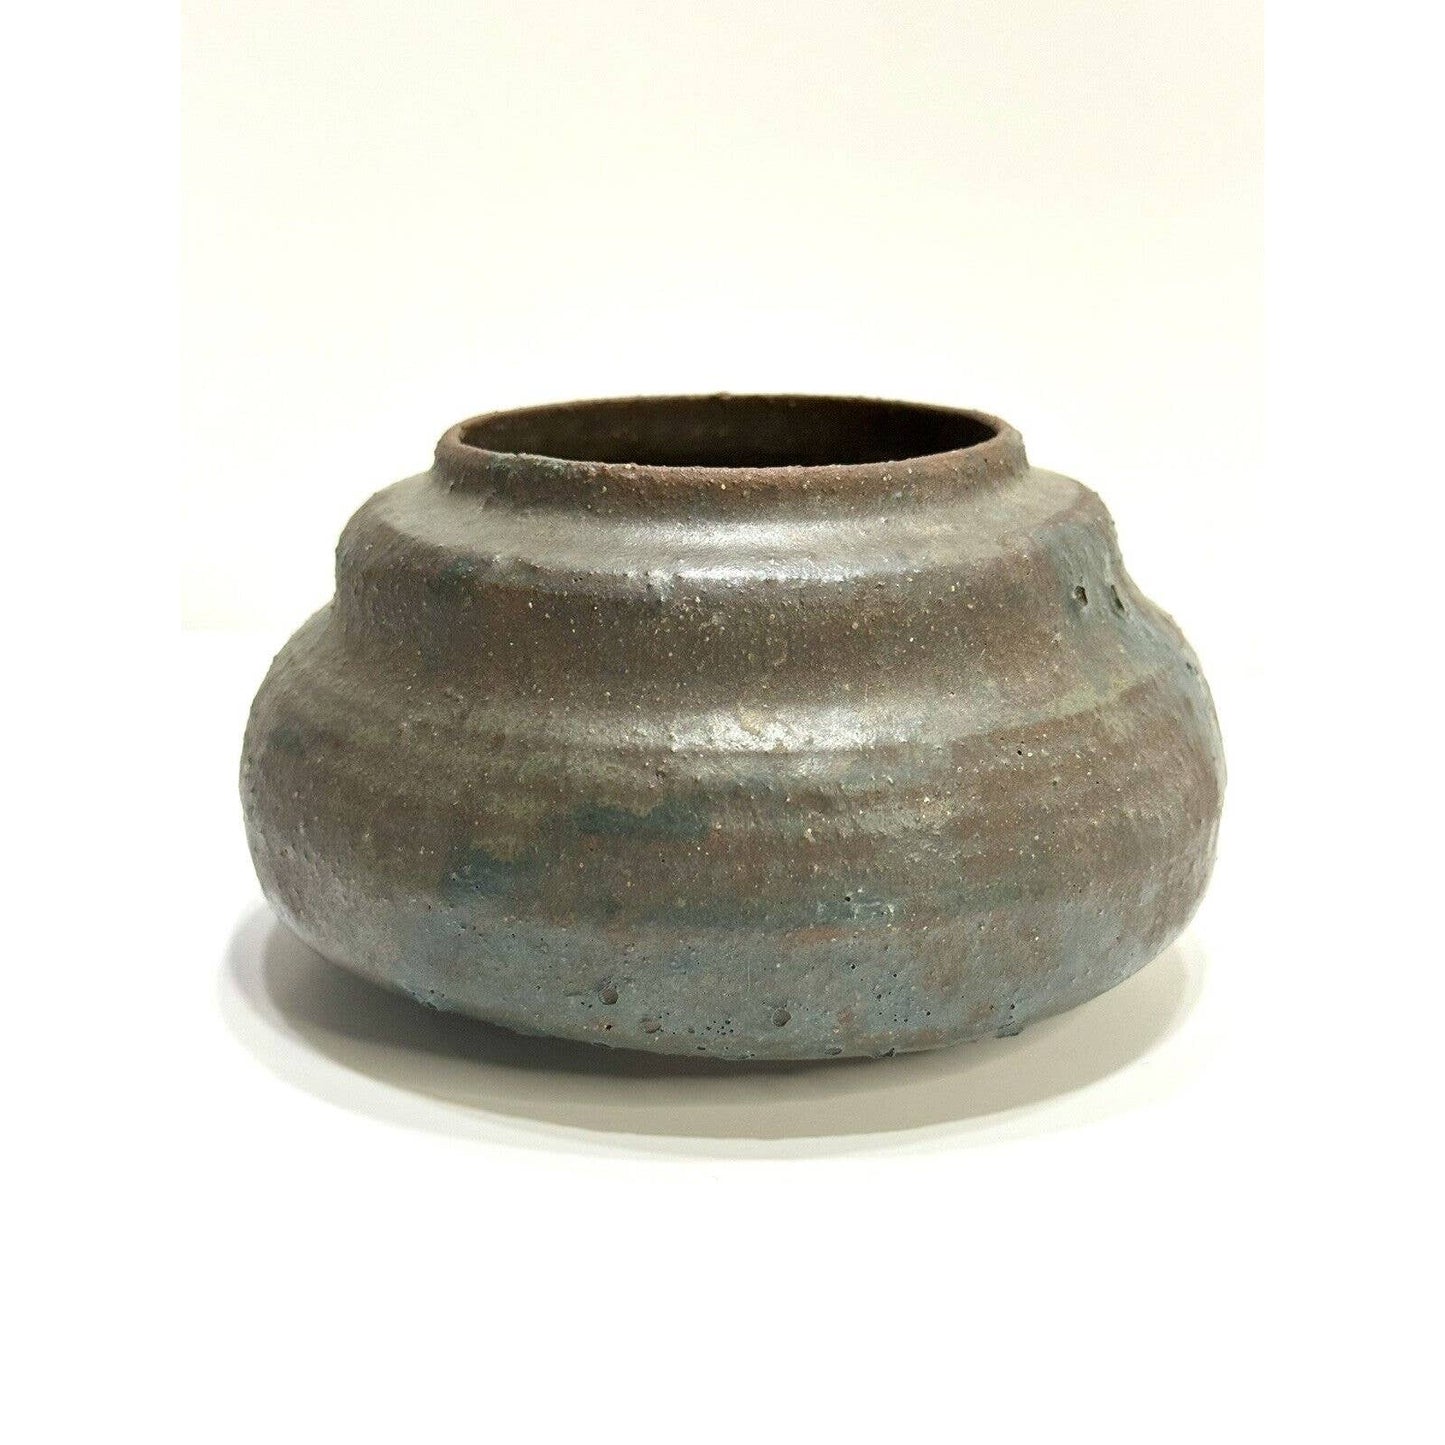 StudioStudio Art Pottery Bowl Pot Drip Glazed Signed Joan Moscato Rustic Dark Metallic - Black Dog Vintage